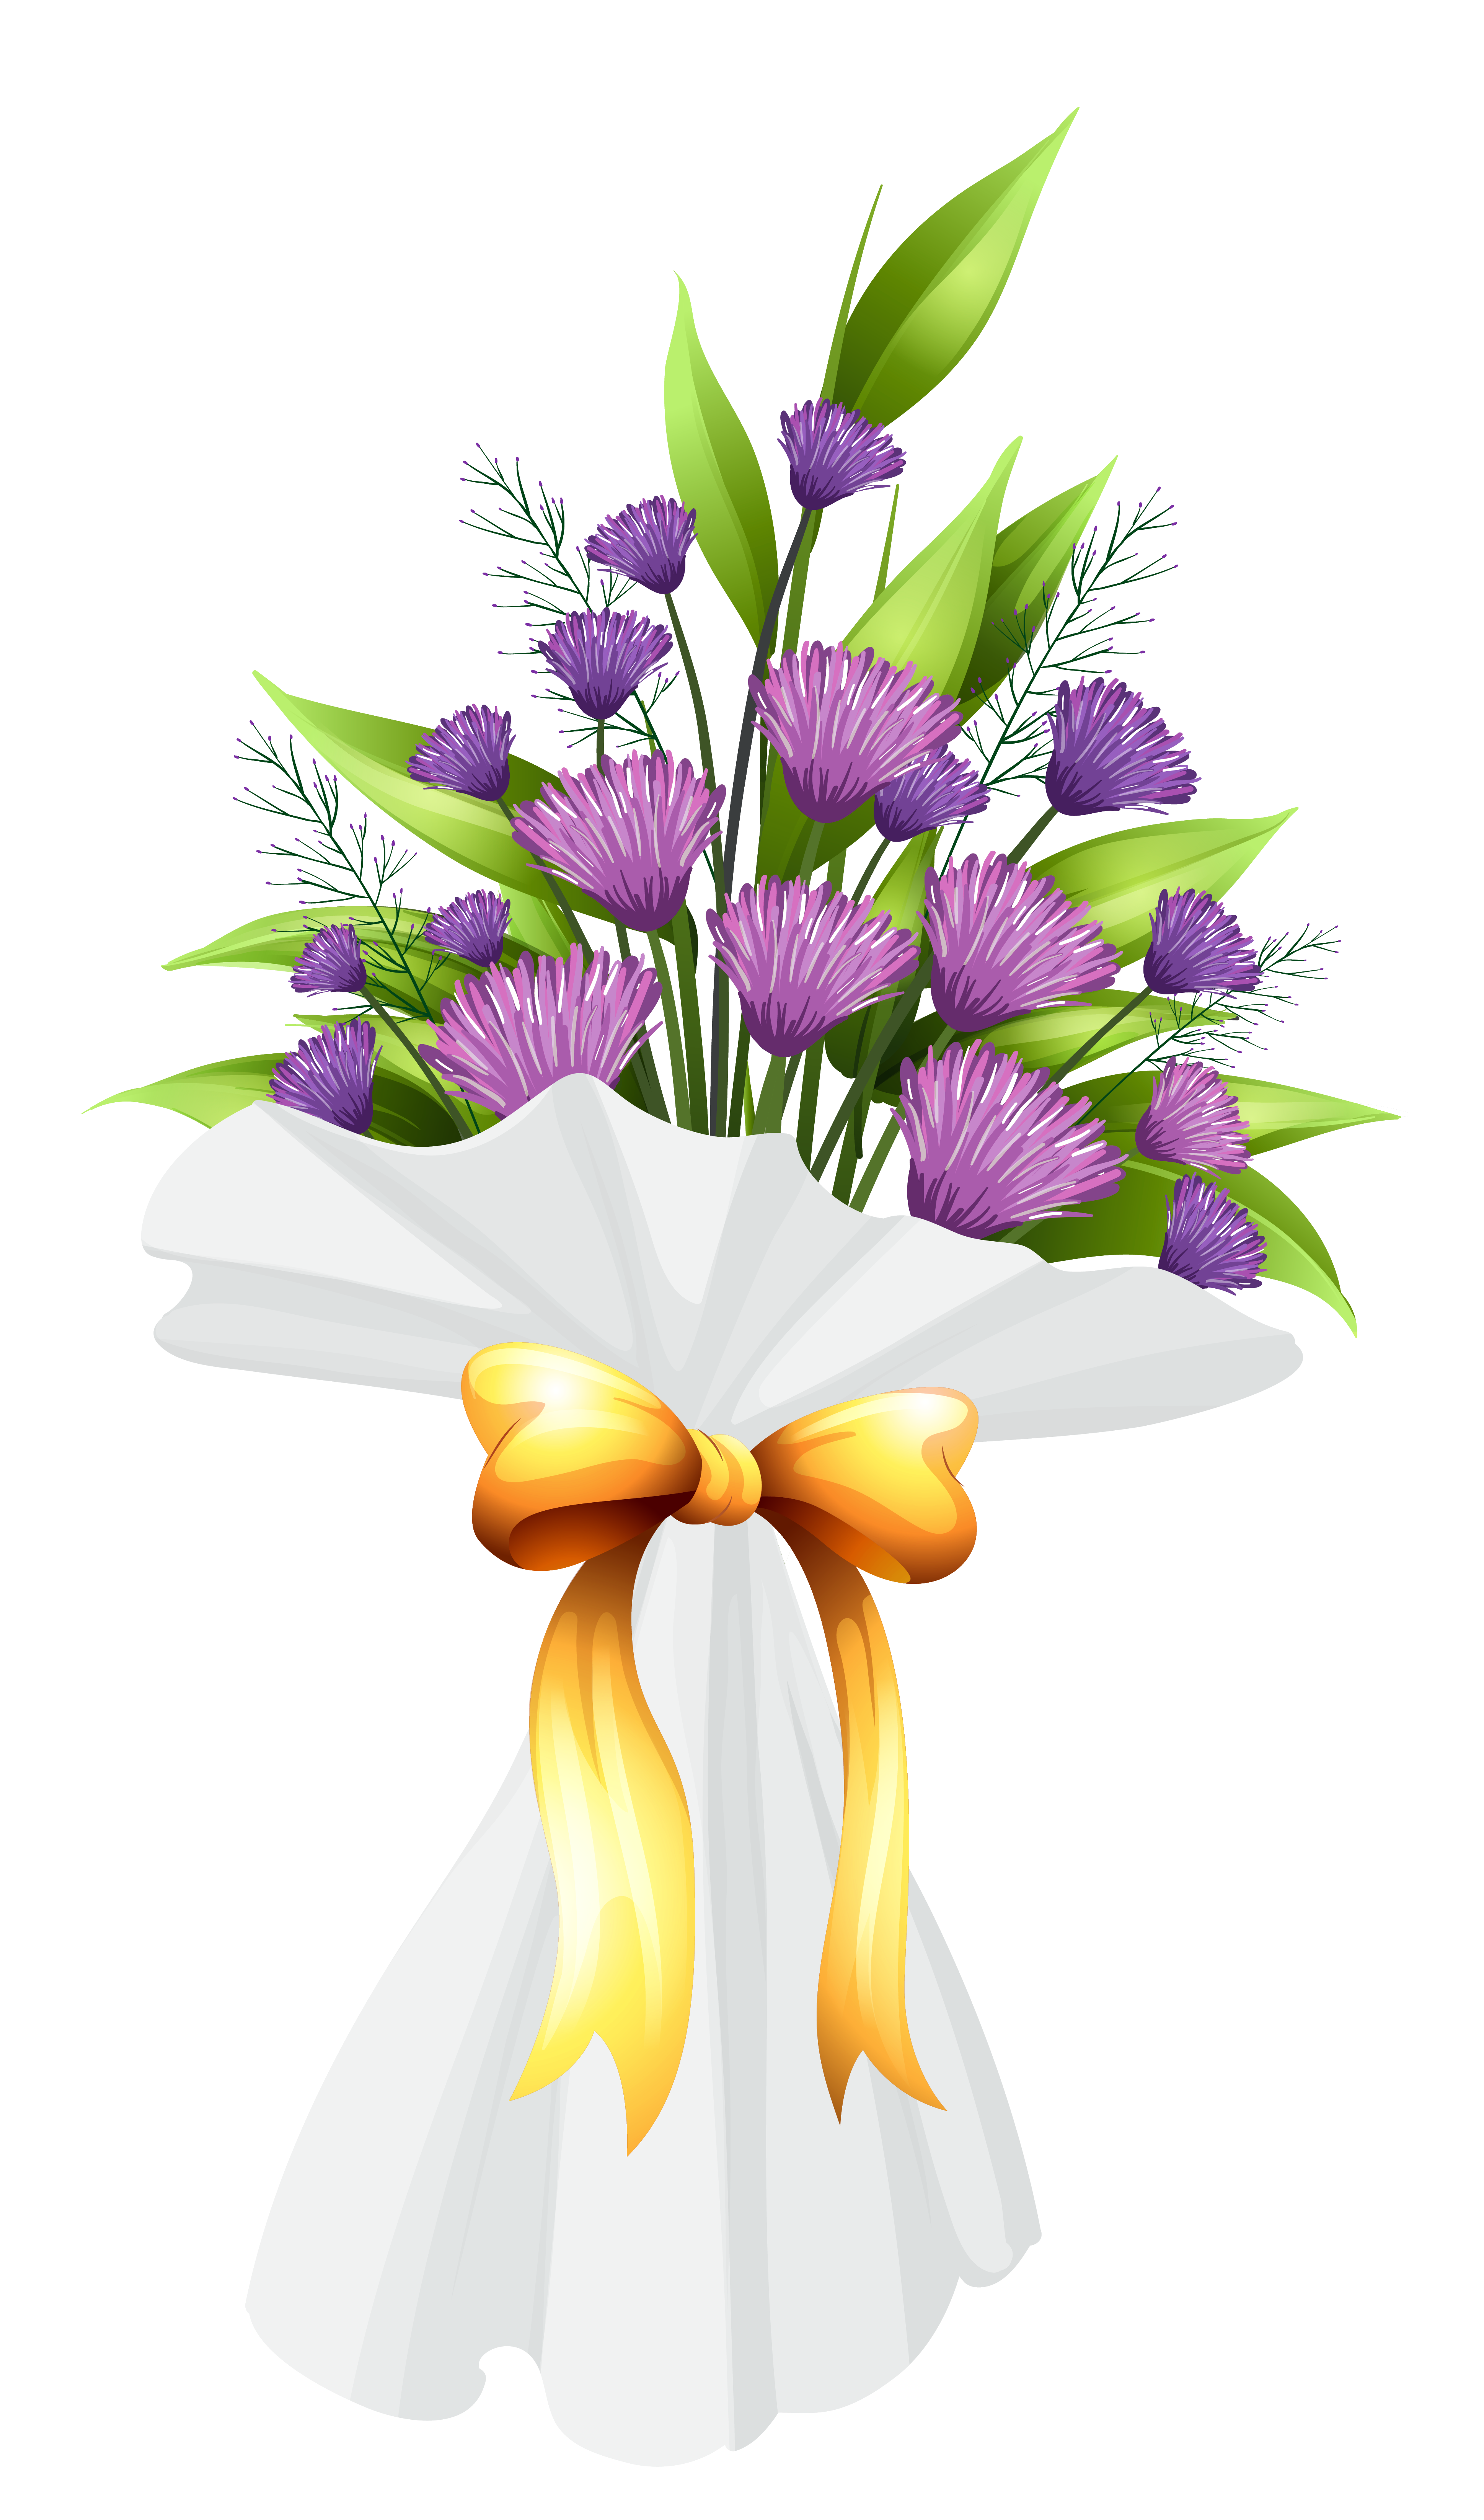 Flower clipart happy birthday. Purple flowers bouquet png